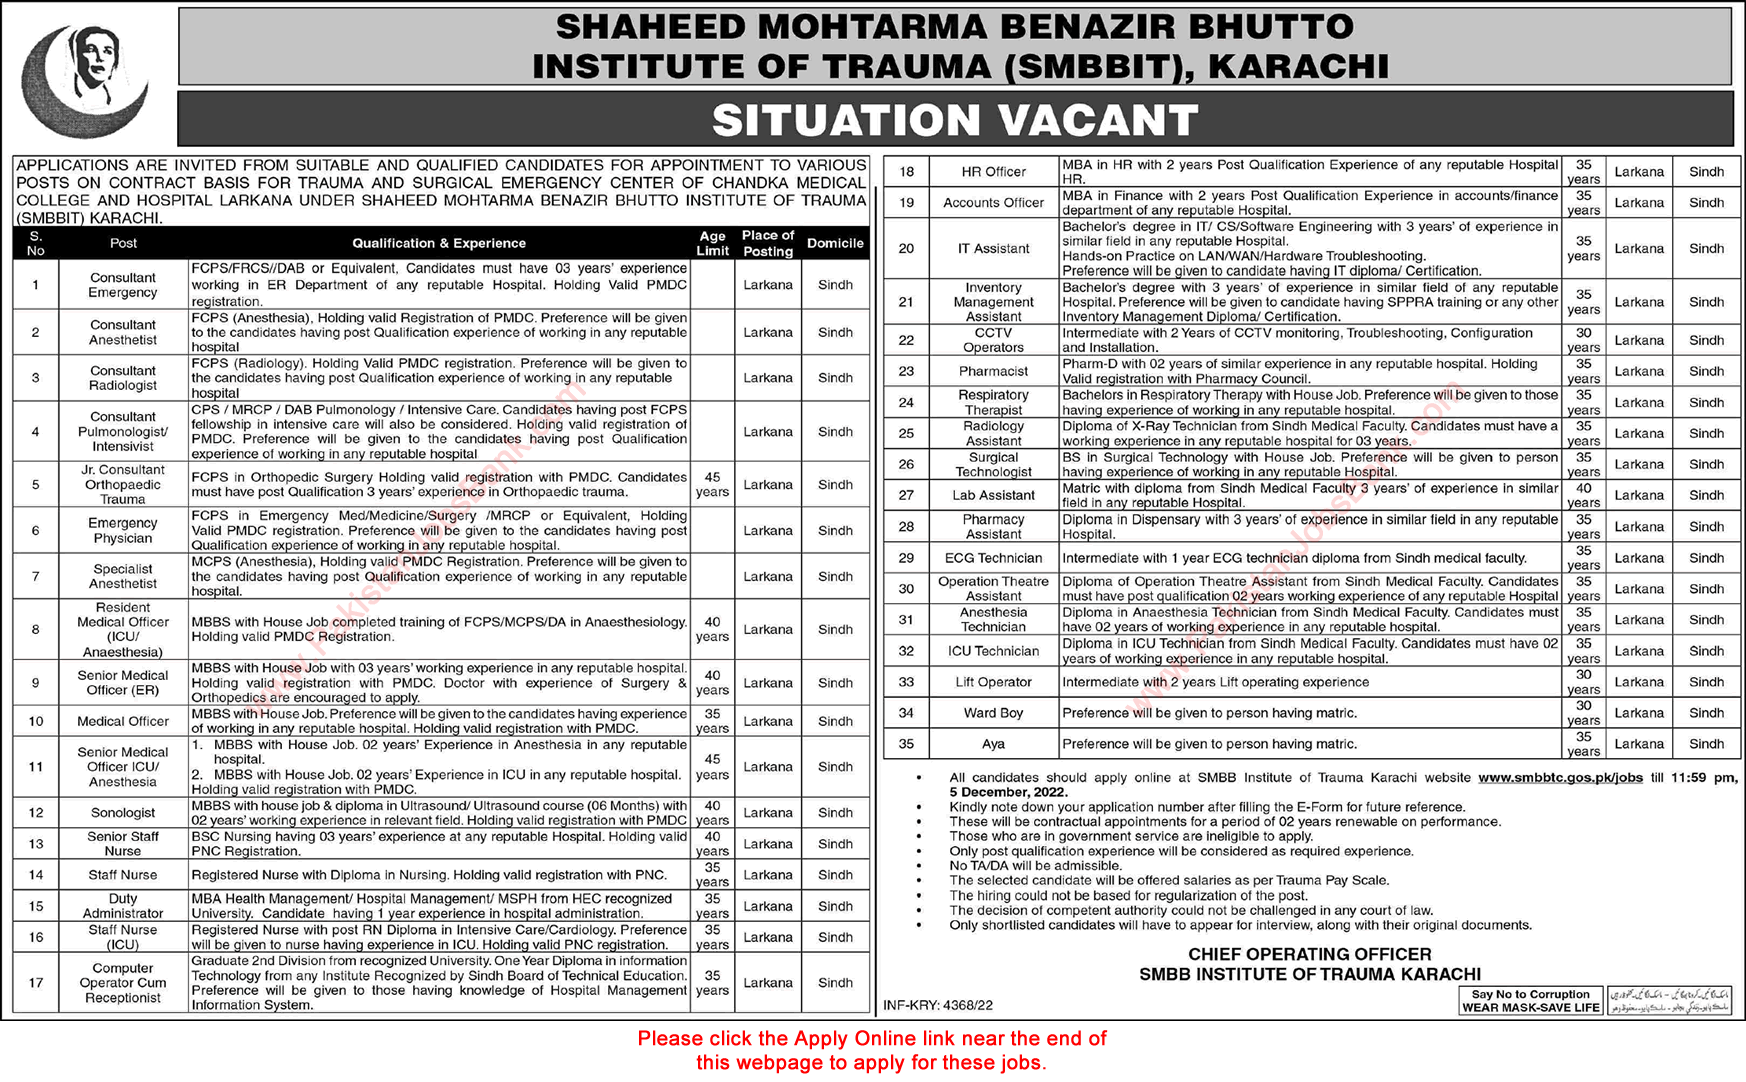 Shaheed Mohtarma Benazir Bhutto Institute of Trauma Karachi Jobs November 2022 SMBBIT Online Apply Latest